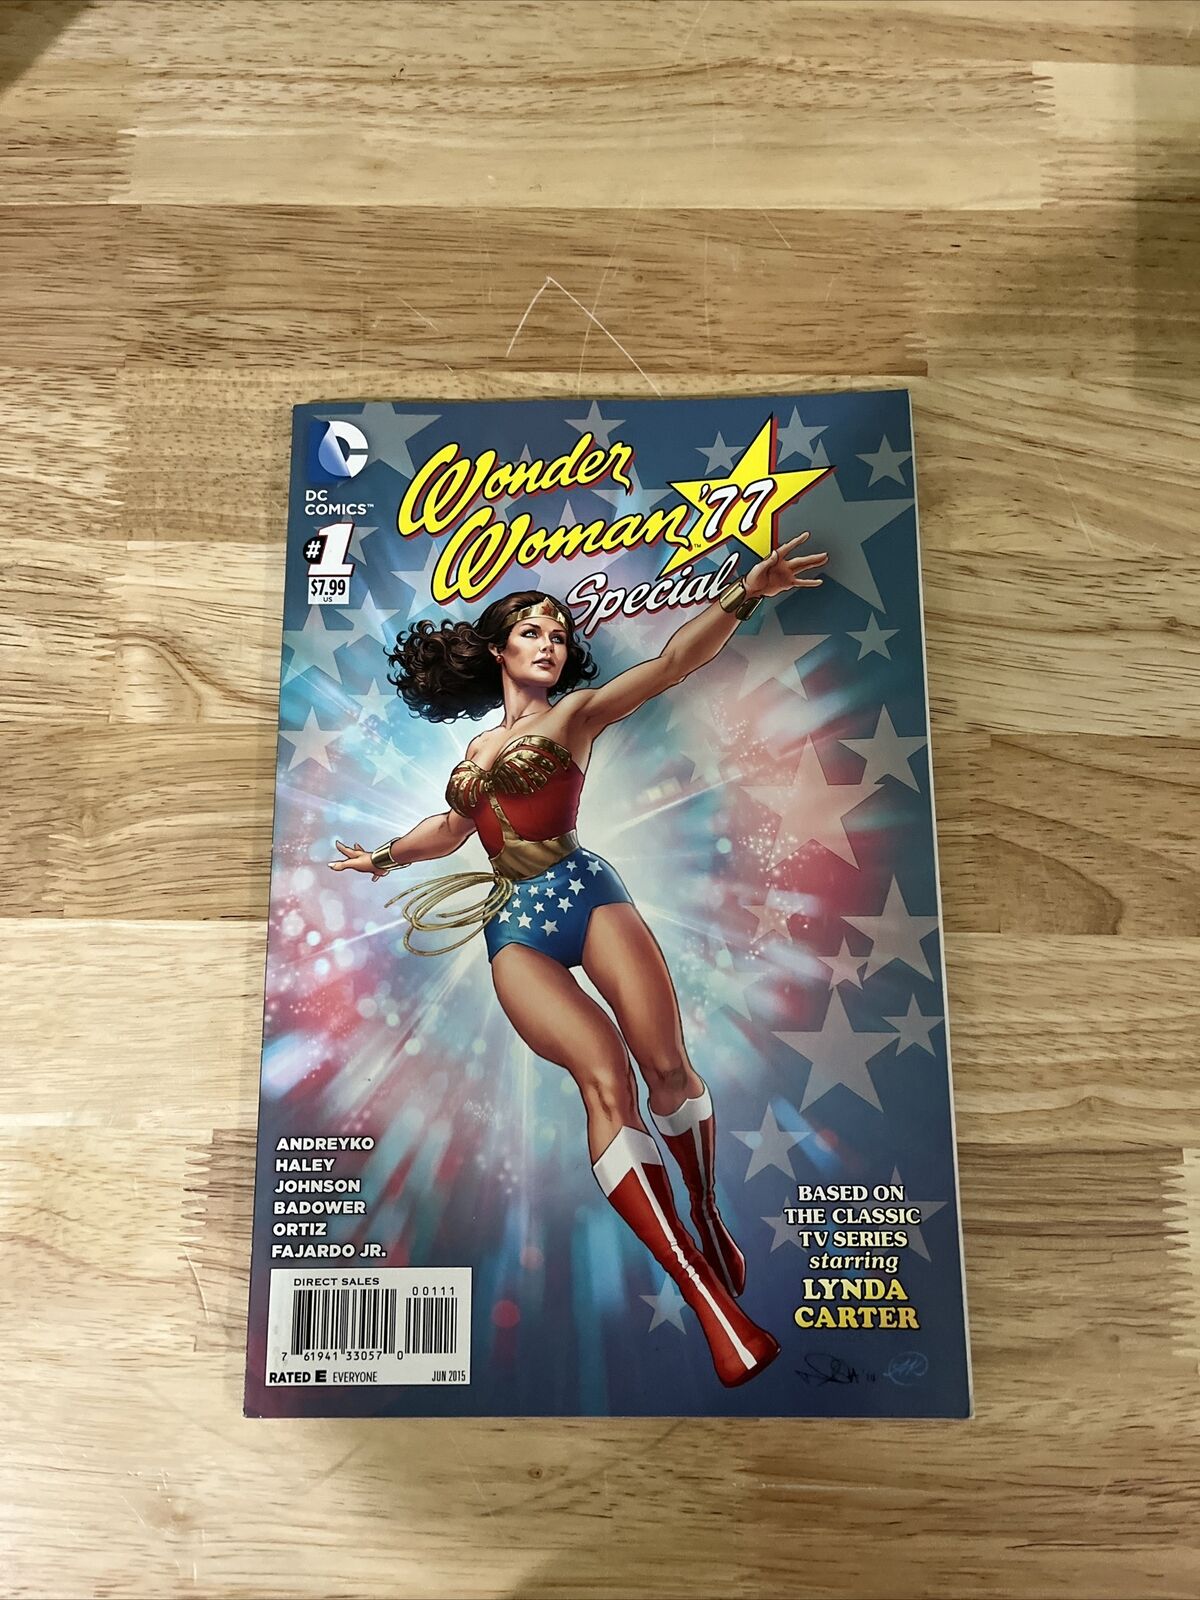 Wonder Woman \'77 Special #1 June 2015 G03